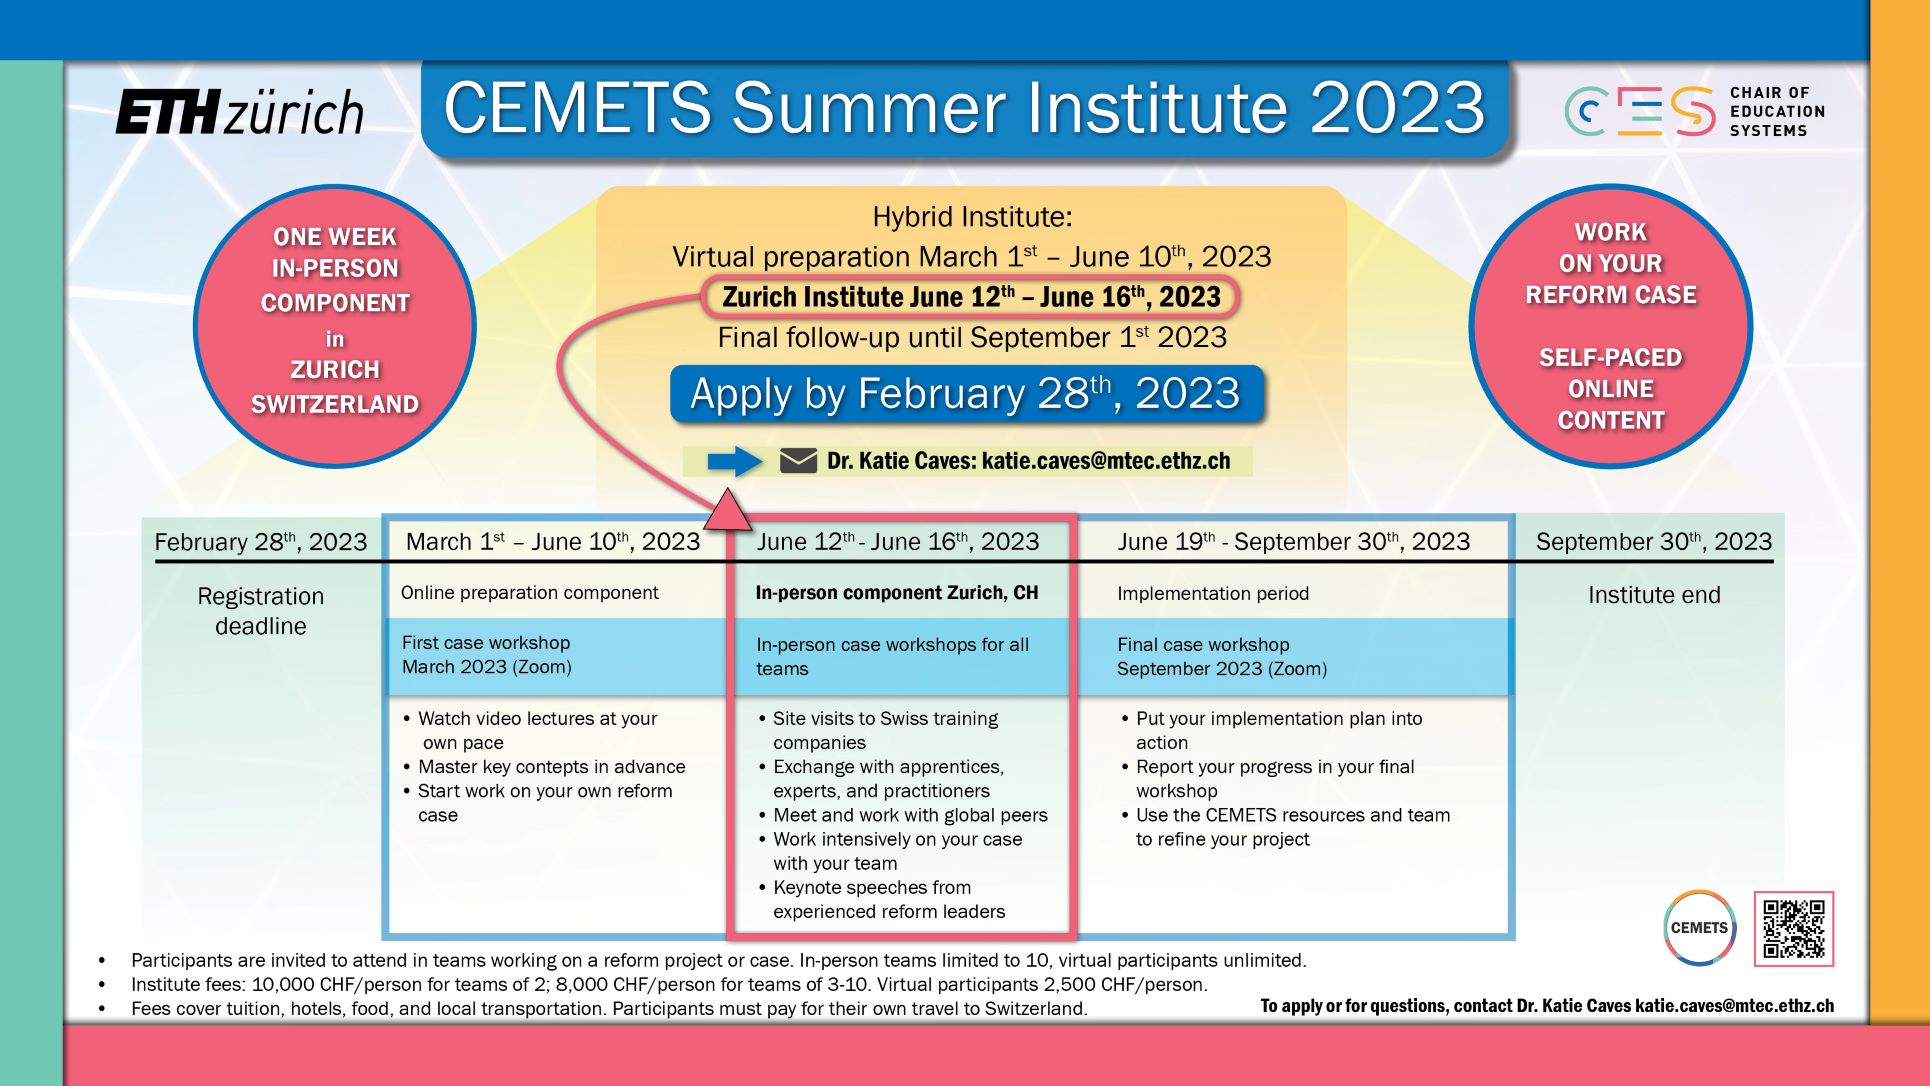 Enlarged view: CEMETS summer institute flier 2023